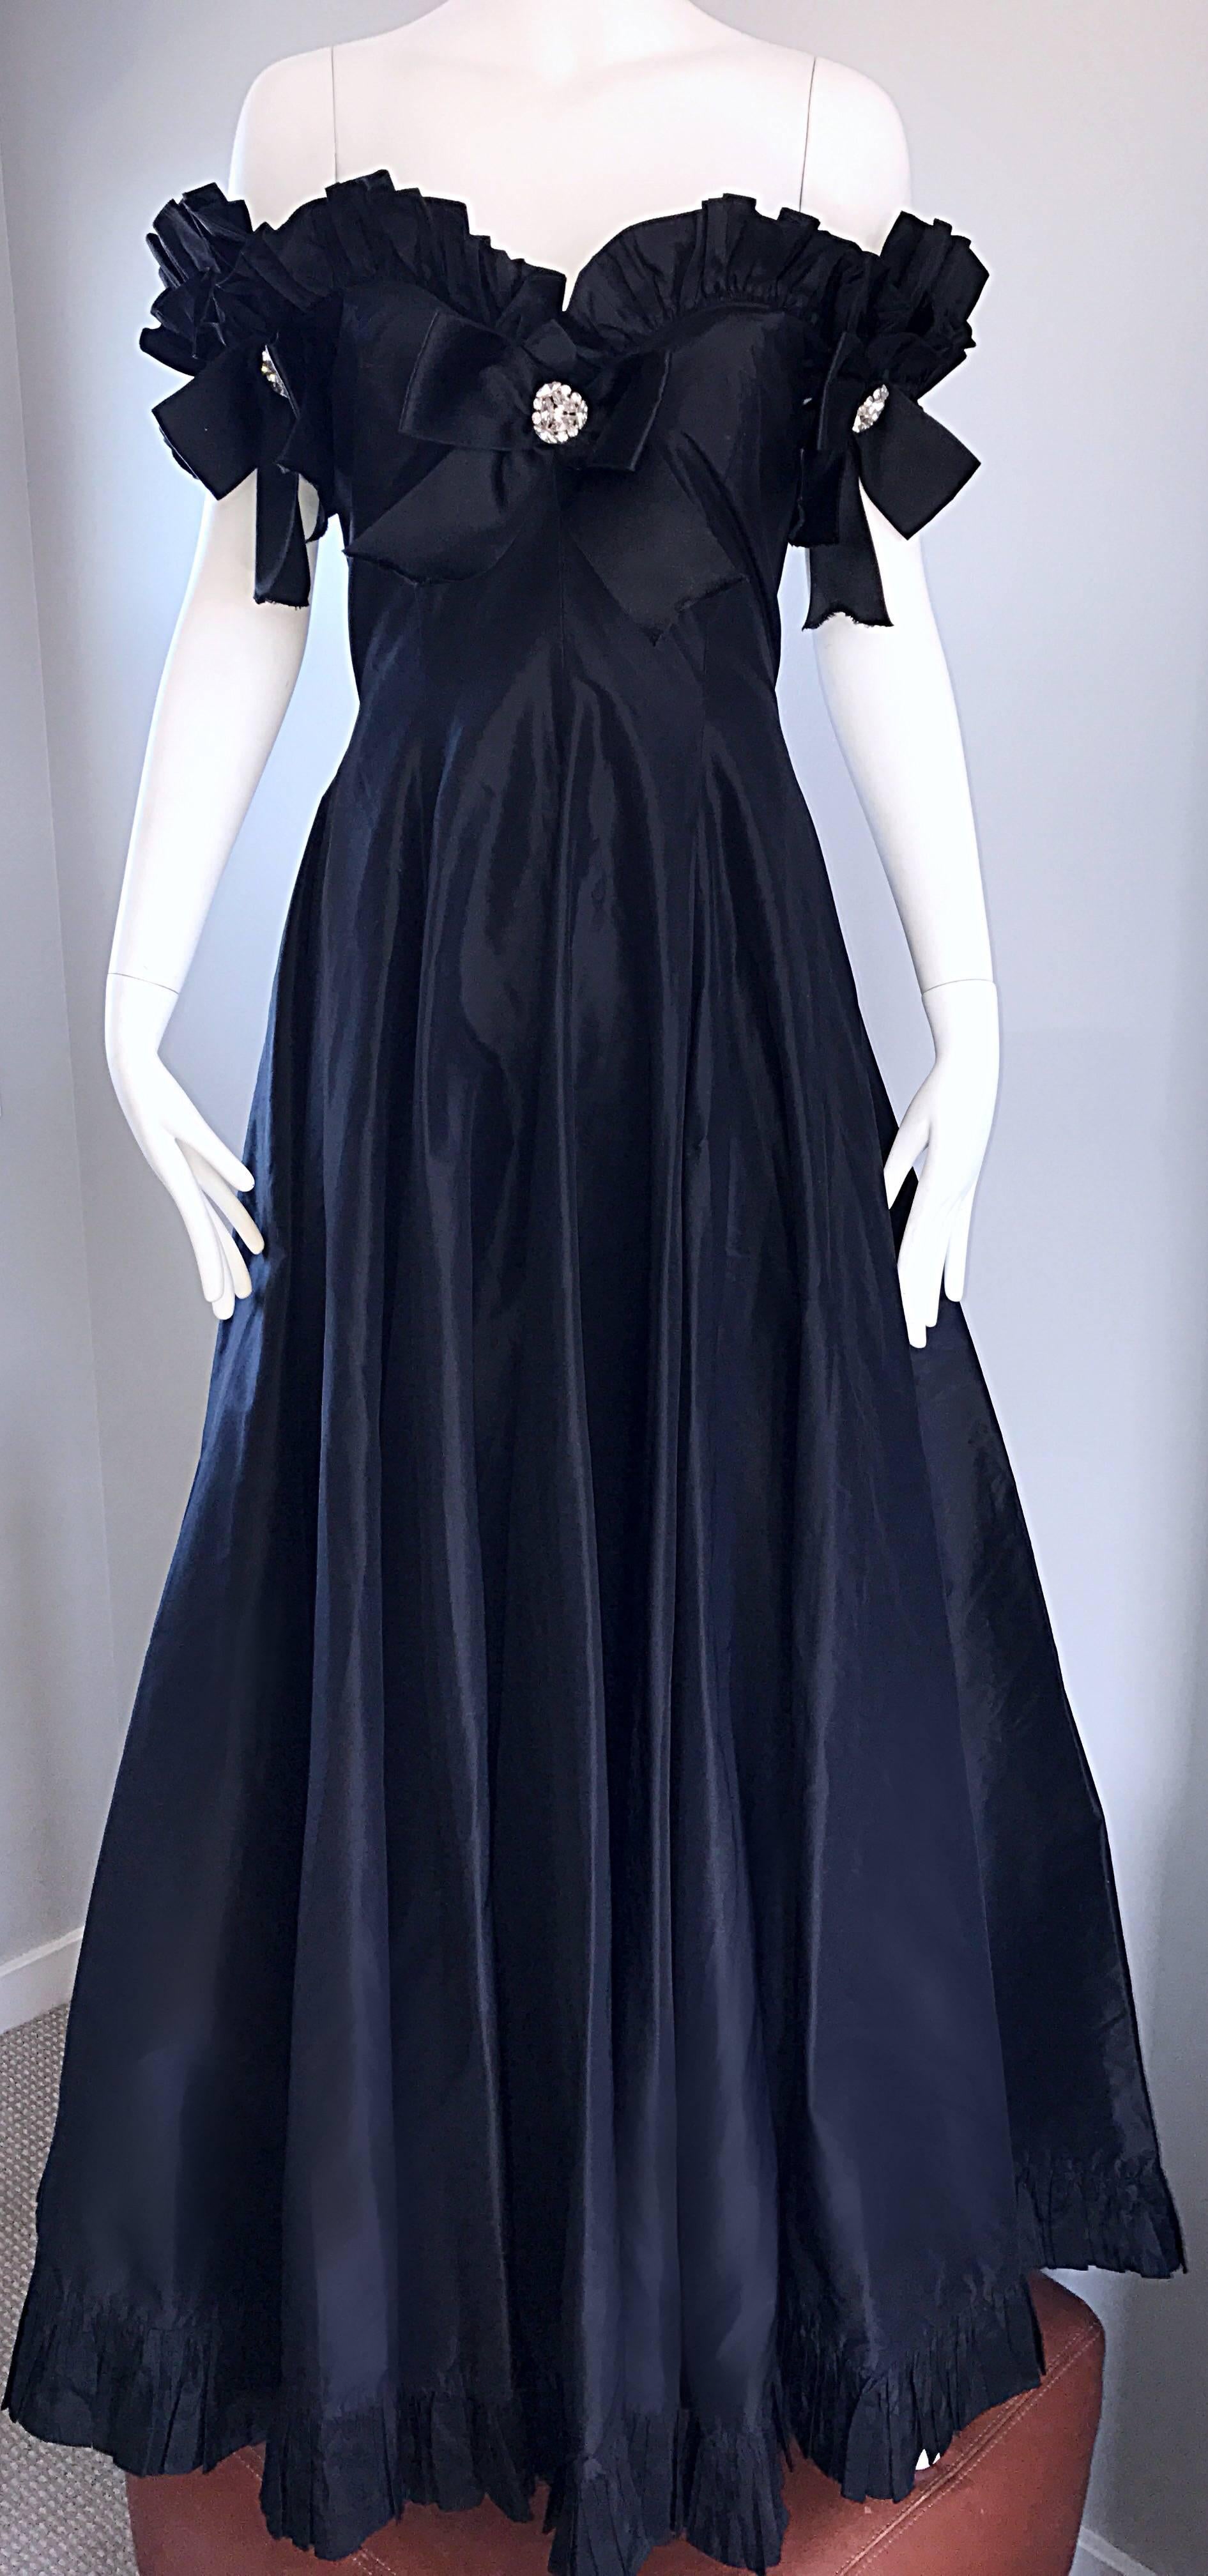 Women's Oscar de la Renta Vintage Black Silk Taffeta Off Shoulder Evening Gown Size 6